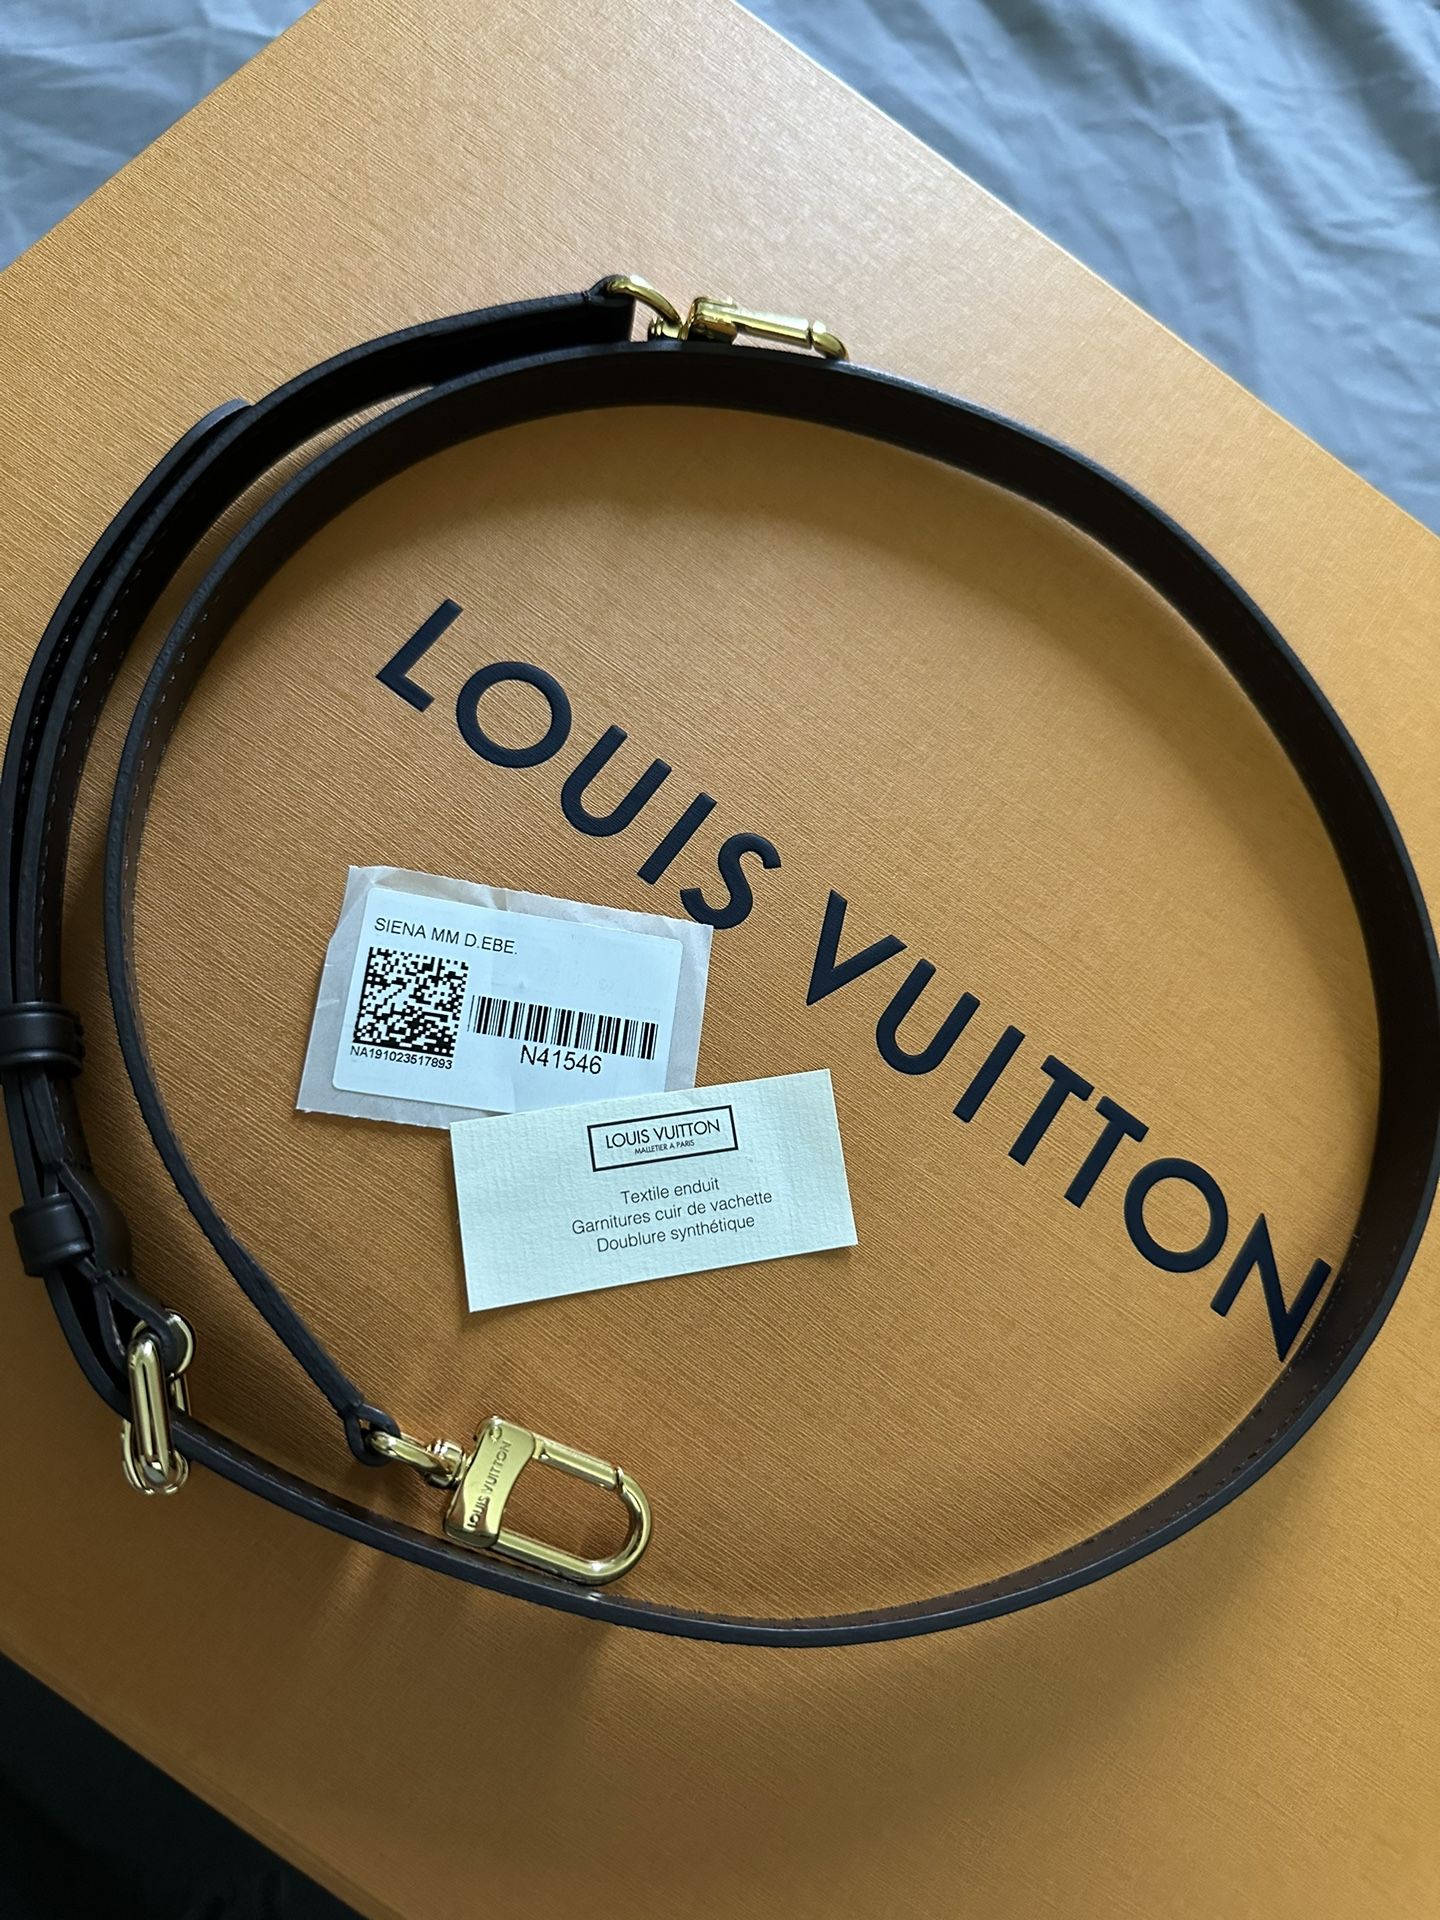 Authentic Louis Vuitton Siena MM for Sale in Kapolei, HI - OfferUp